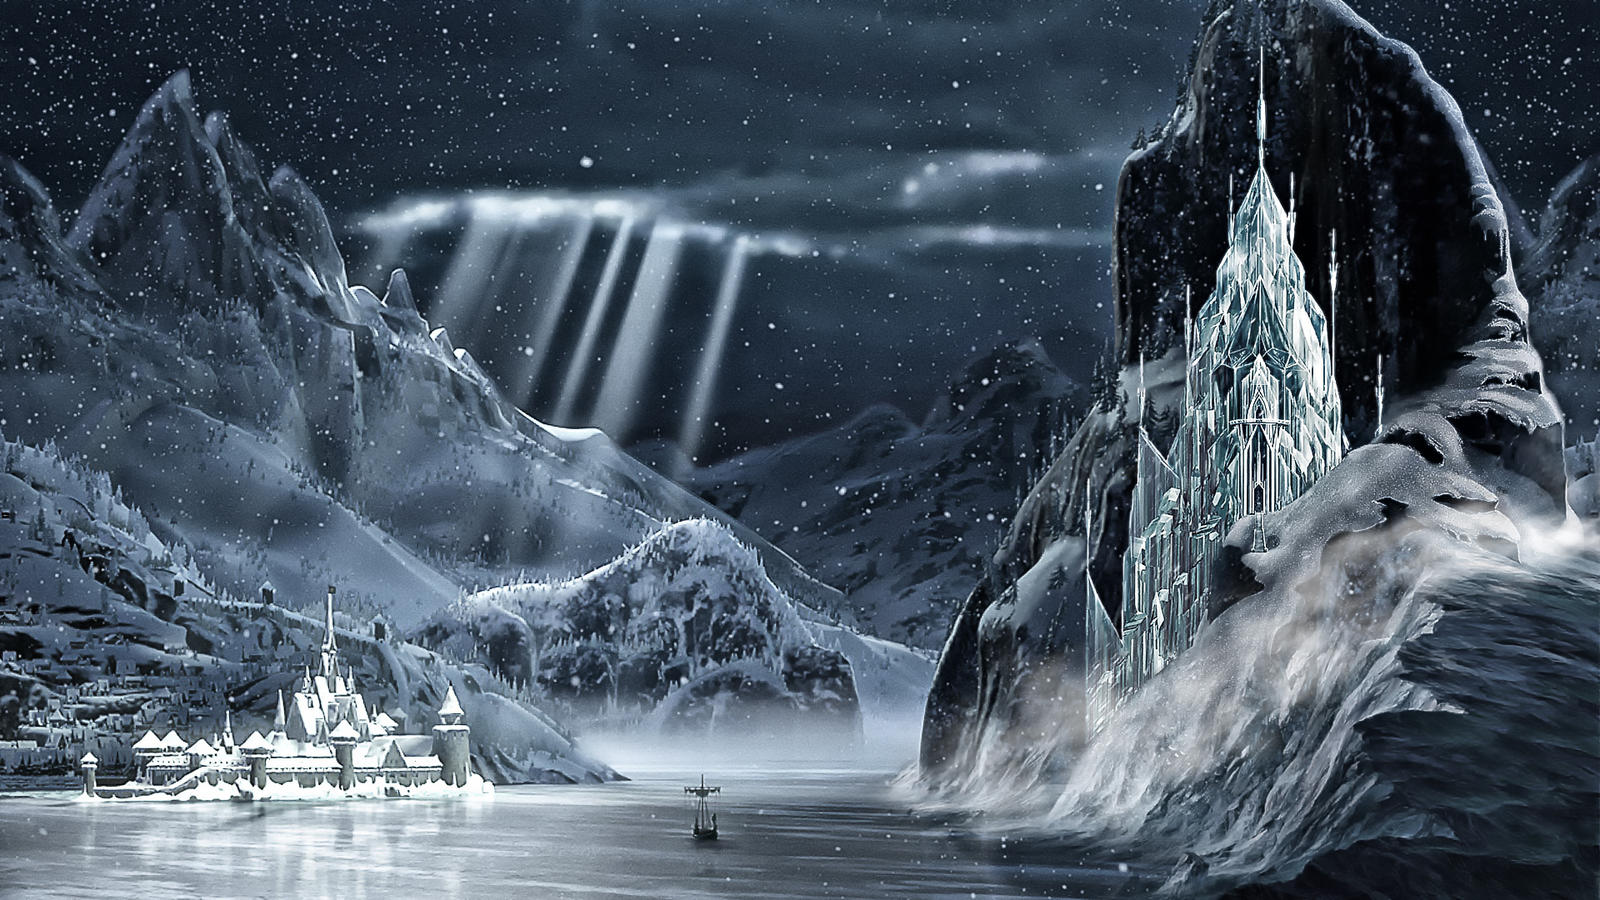 Frozen - 1920x1080 (Arendelle Ice Palace 2) by muehlich86 on DeviantArt